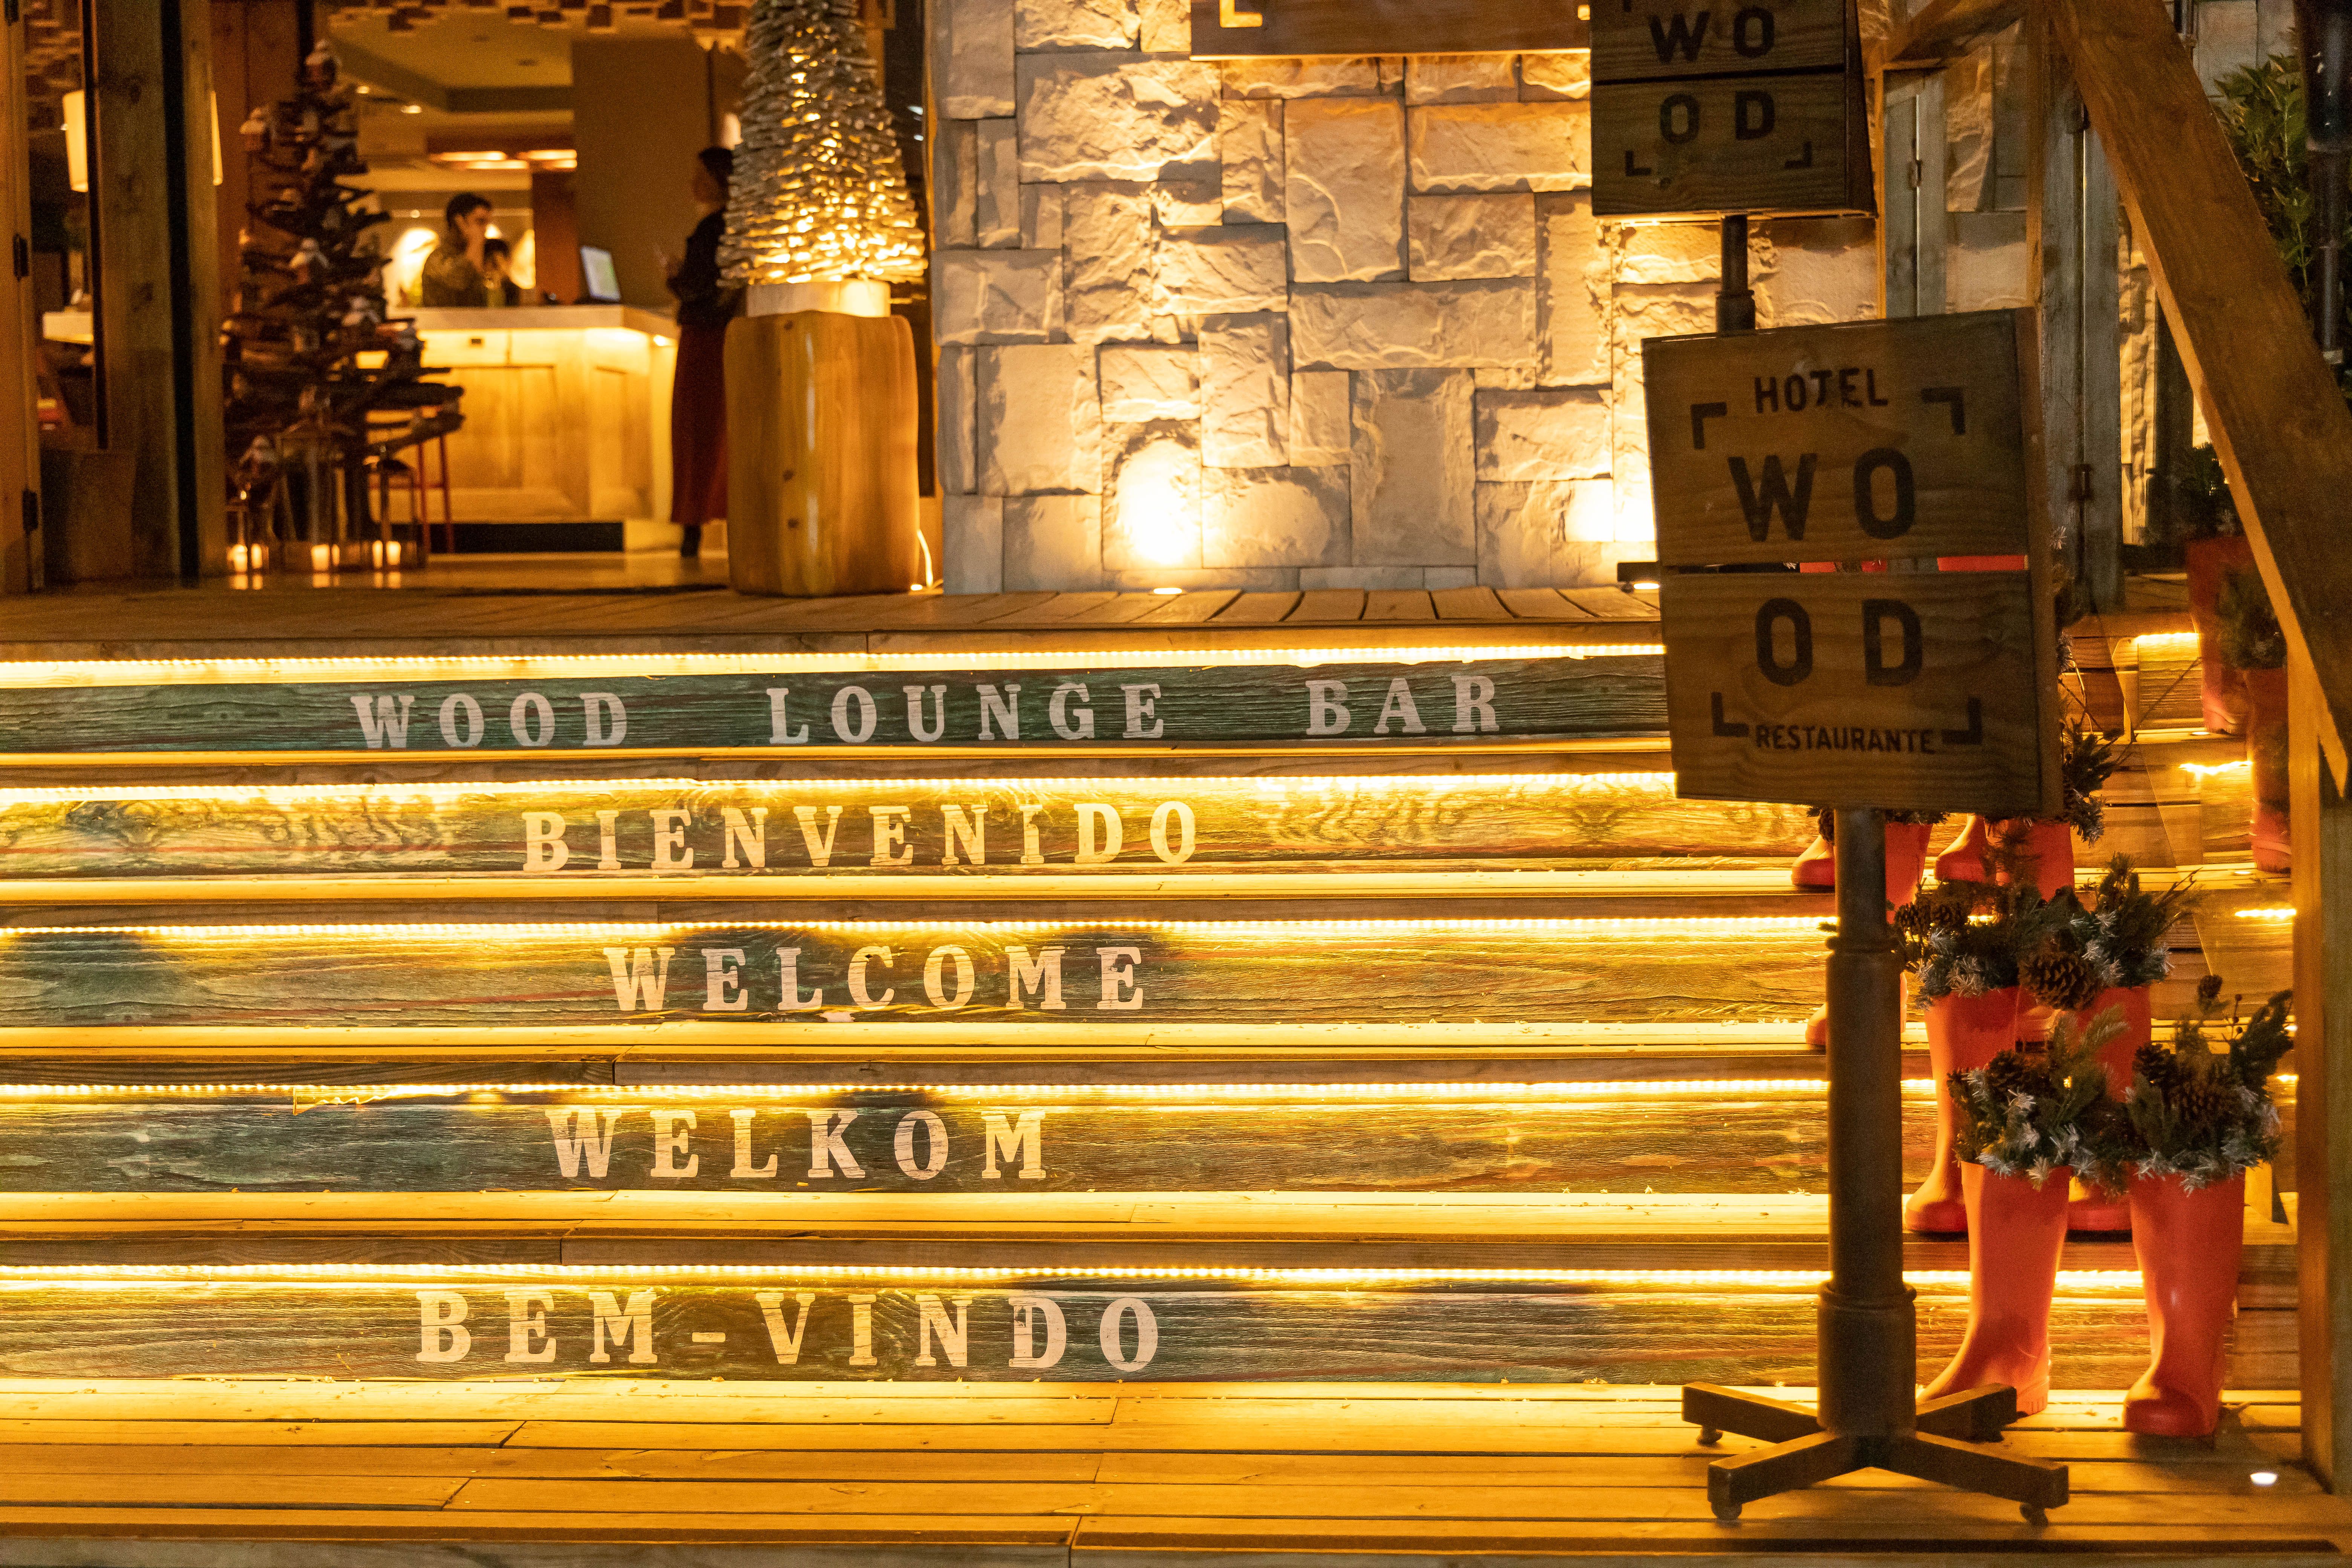 Wood Lounge Bar & Restaurante  (3).jpg